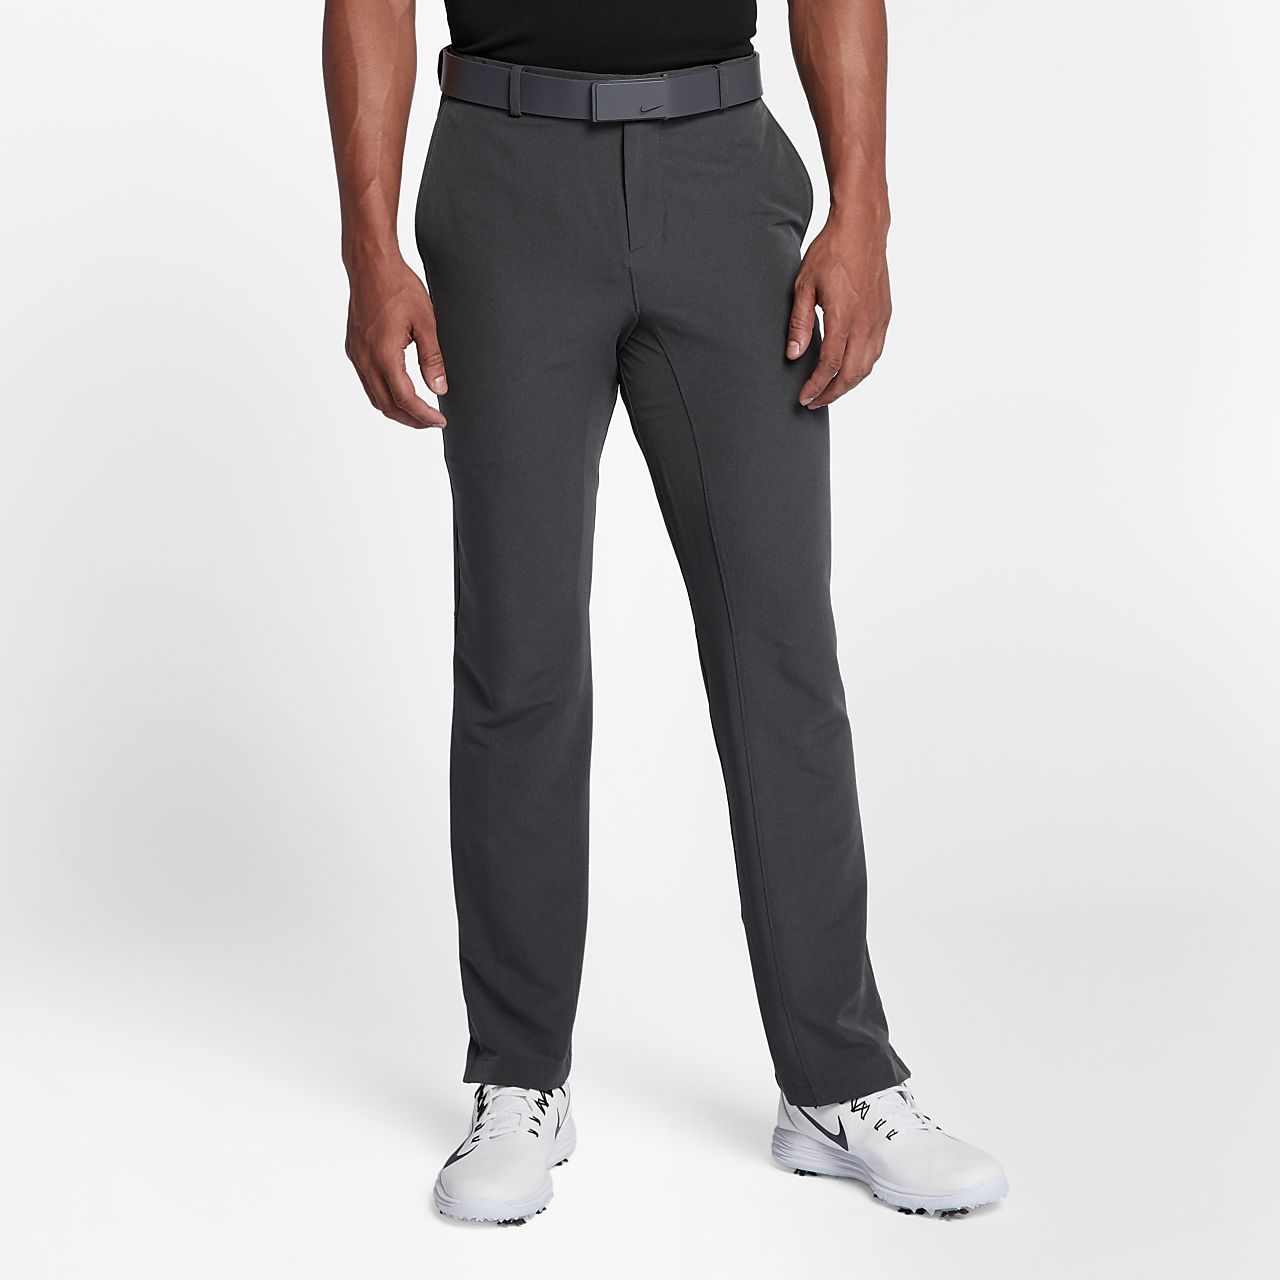 nike men's flex hybrid golf pants